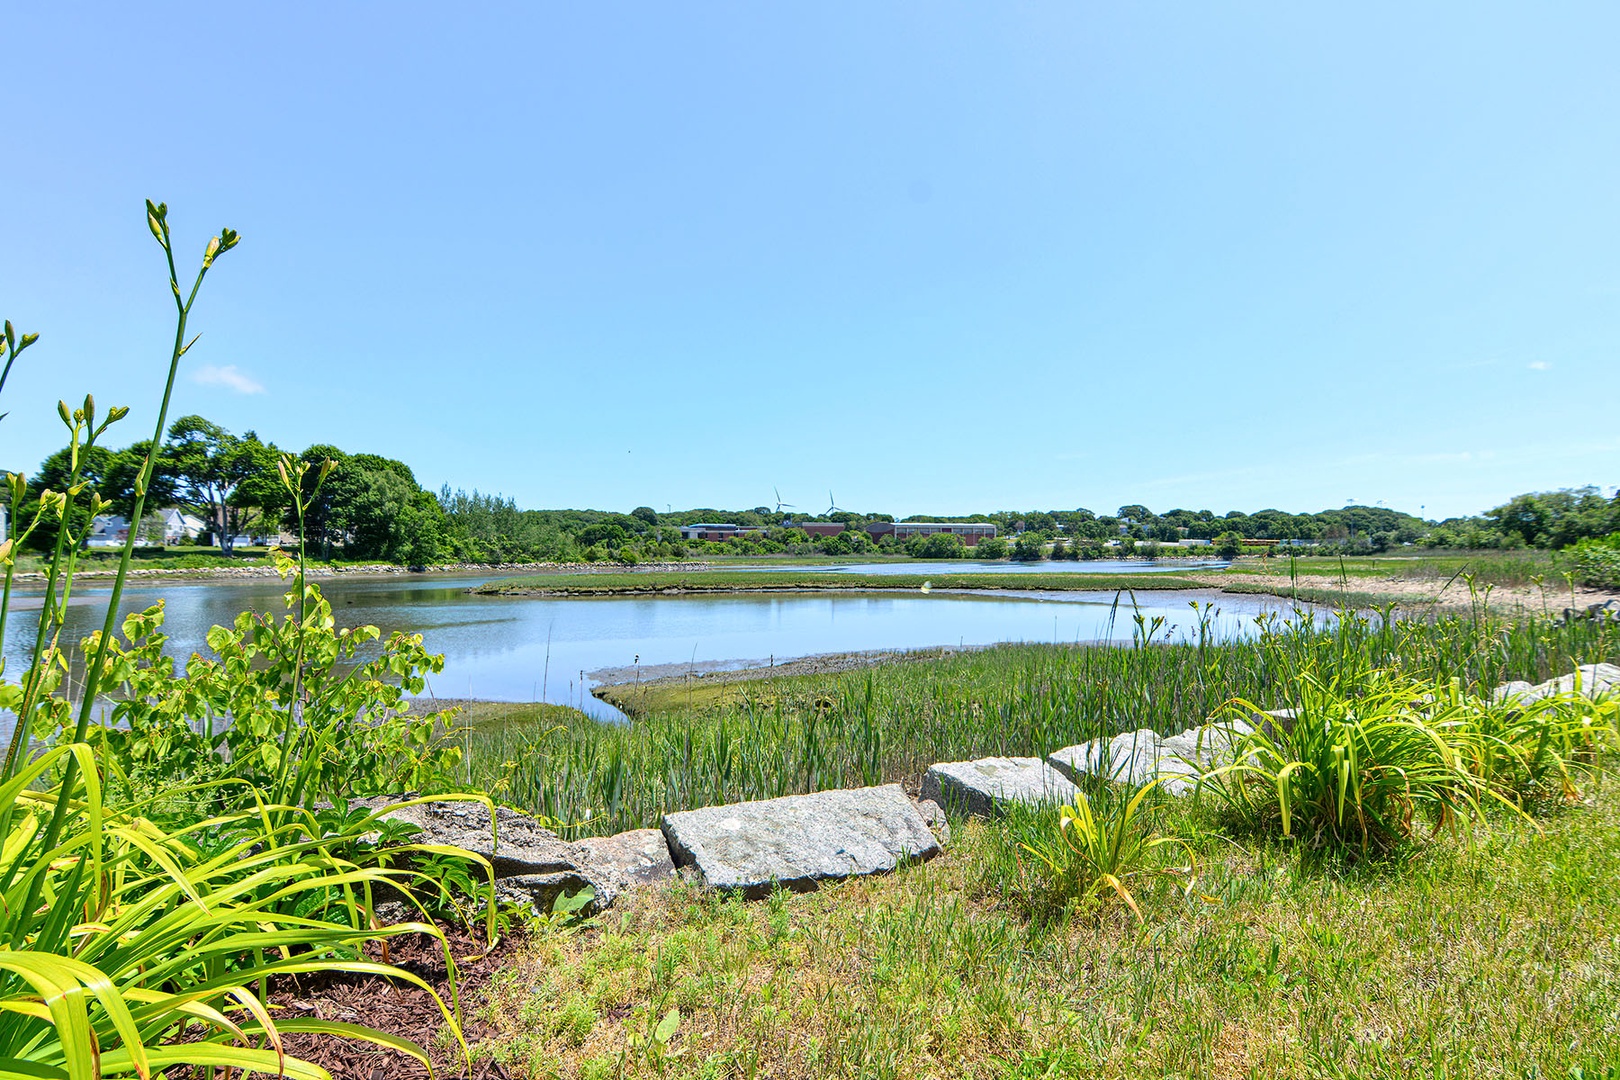 Views of the pond